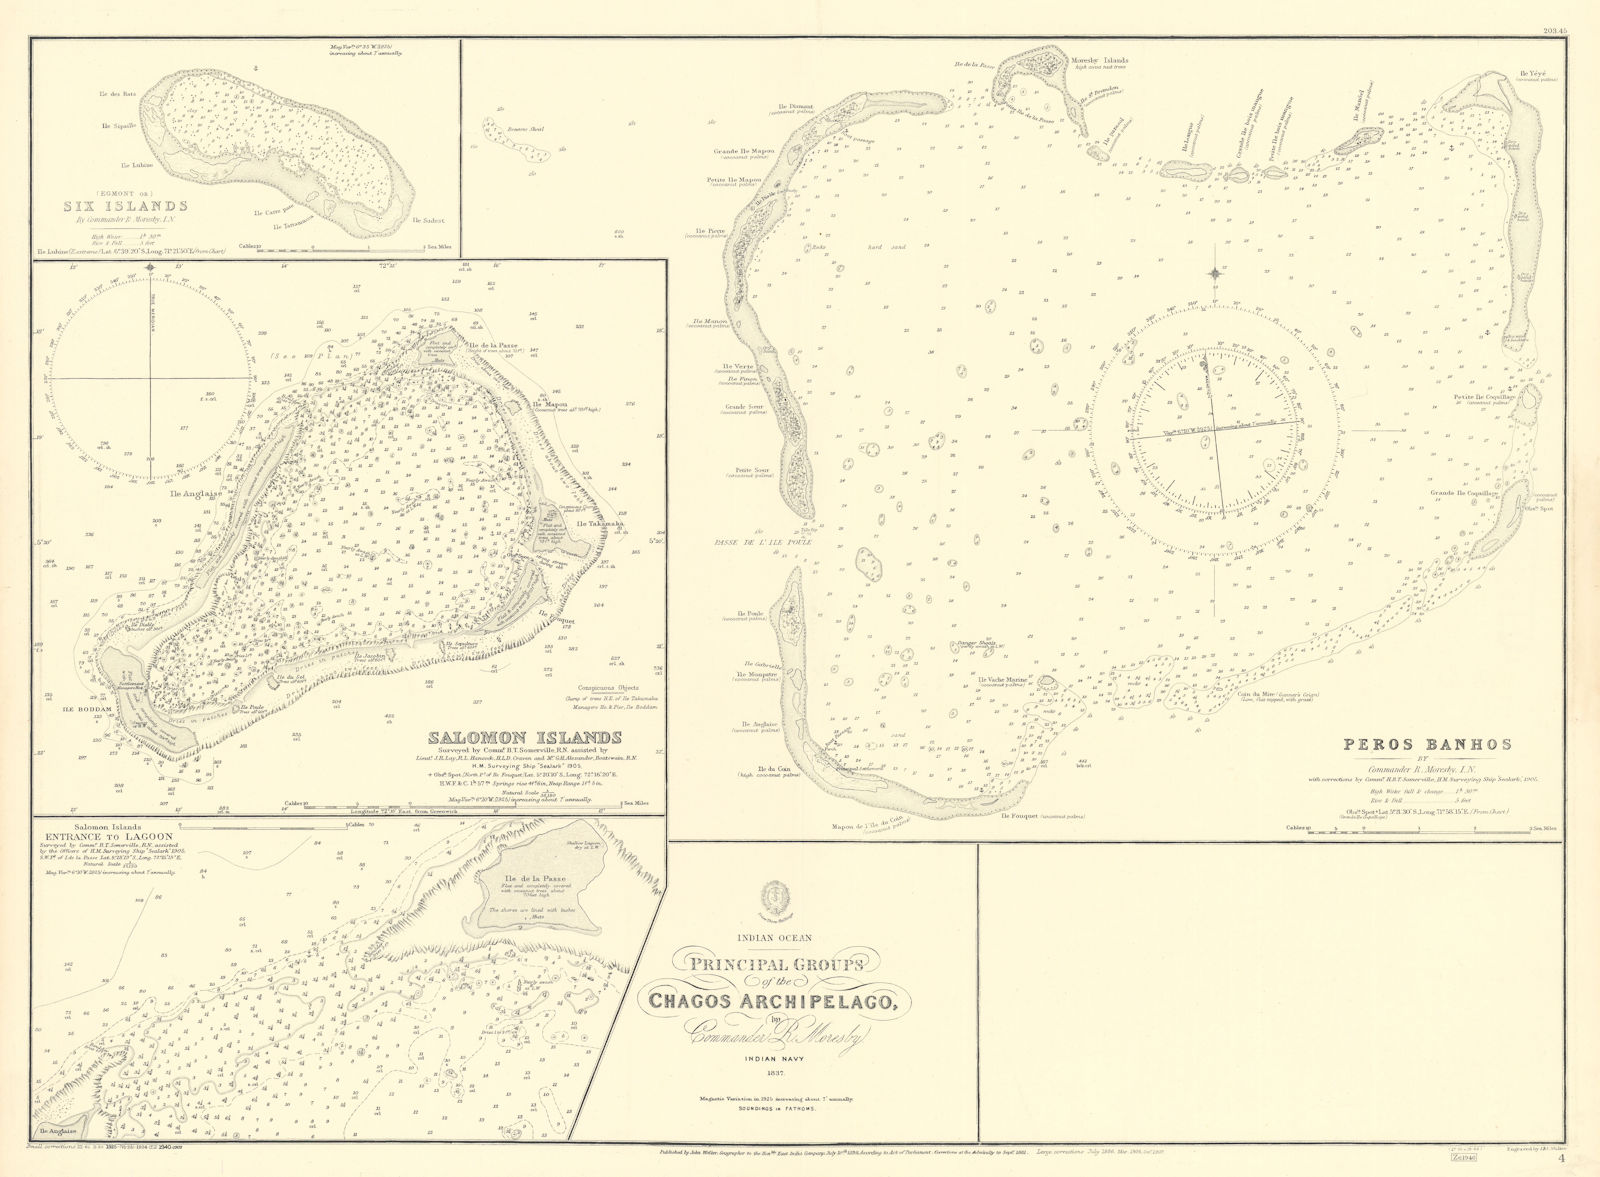 Chagos Islands Peros Banhos Egmont Salomon EAST INDIA CO. chart 1839 (1940) map